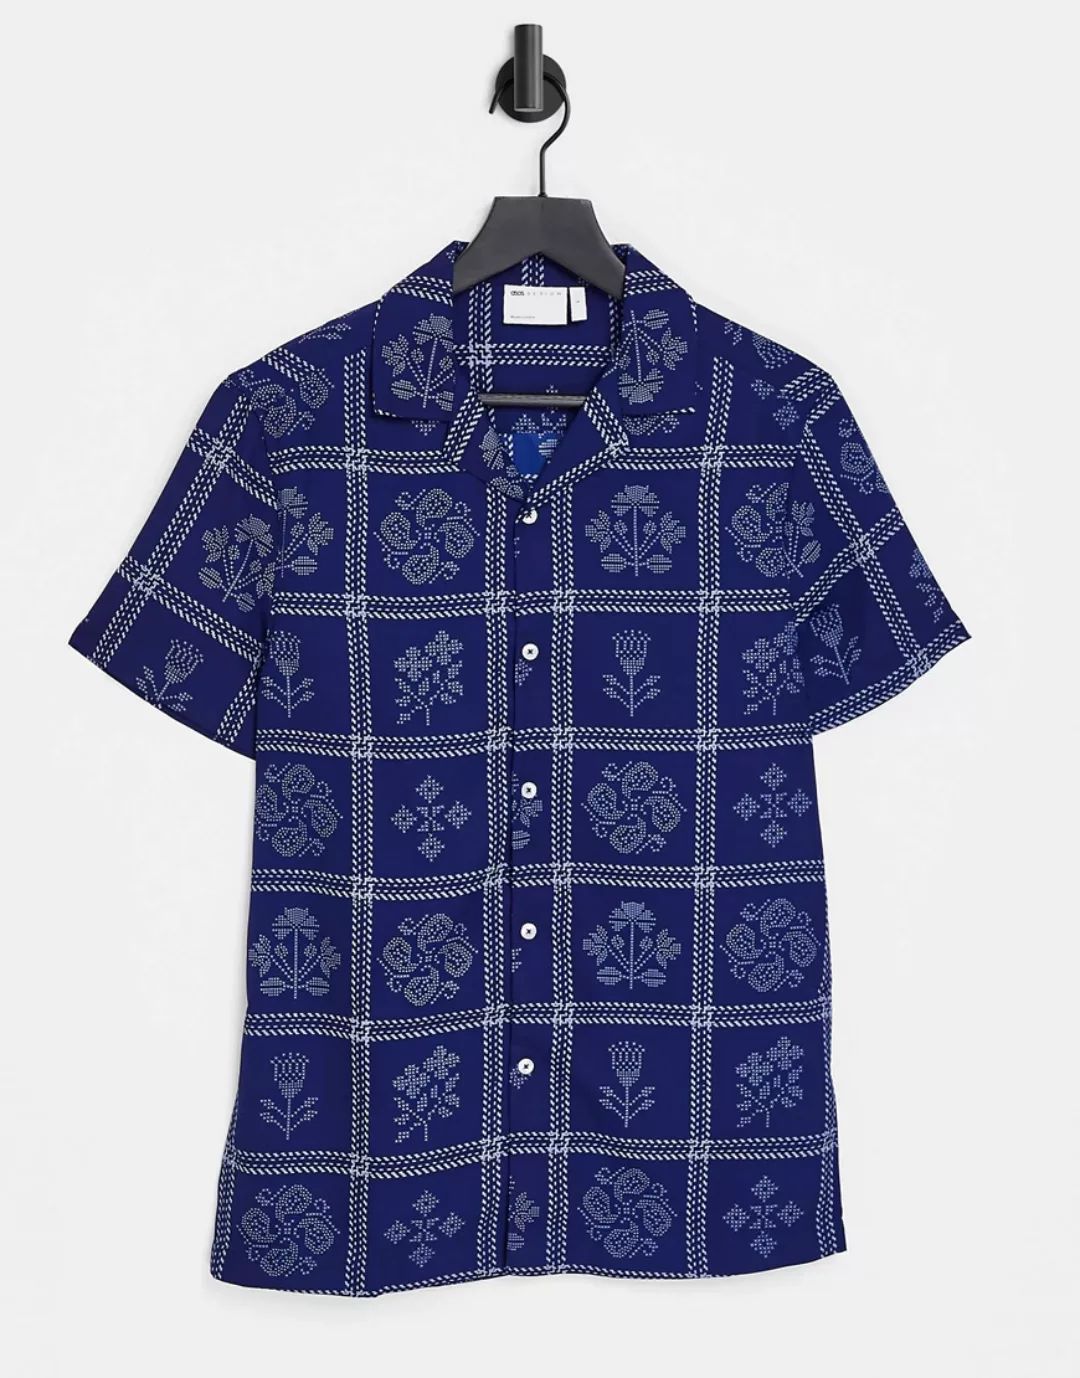 ASOS DESIGN – Hemd in regulärer Passform in Marineblau mit Gobelin-Muster günstig online kaufen